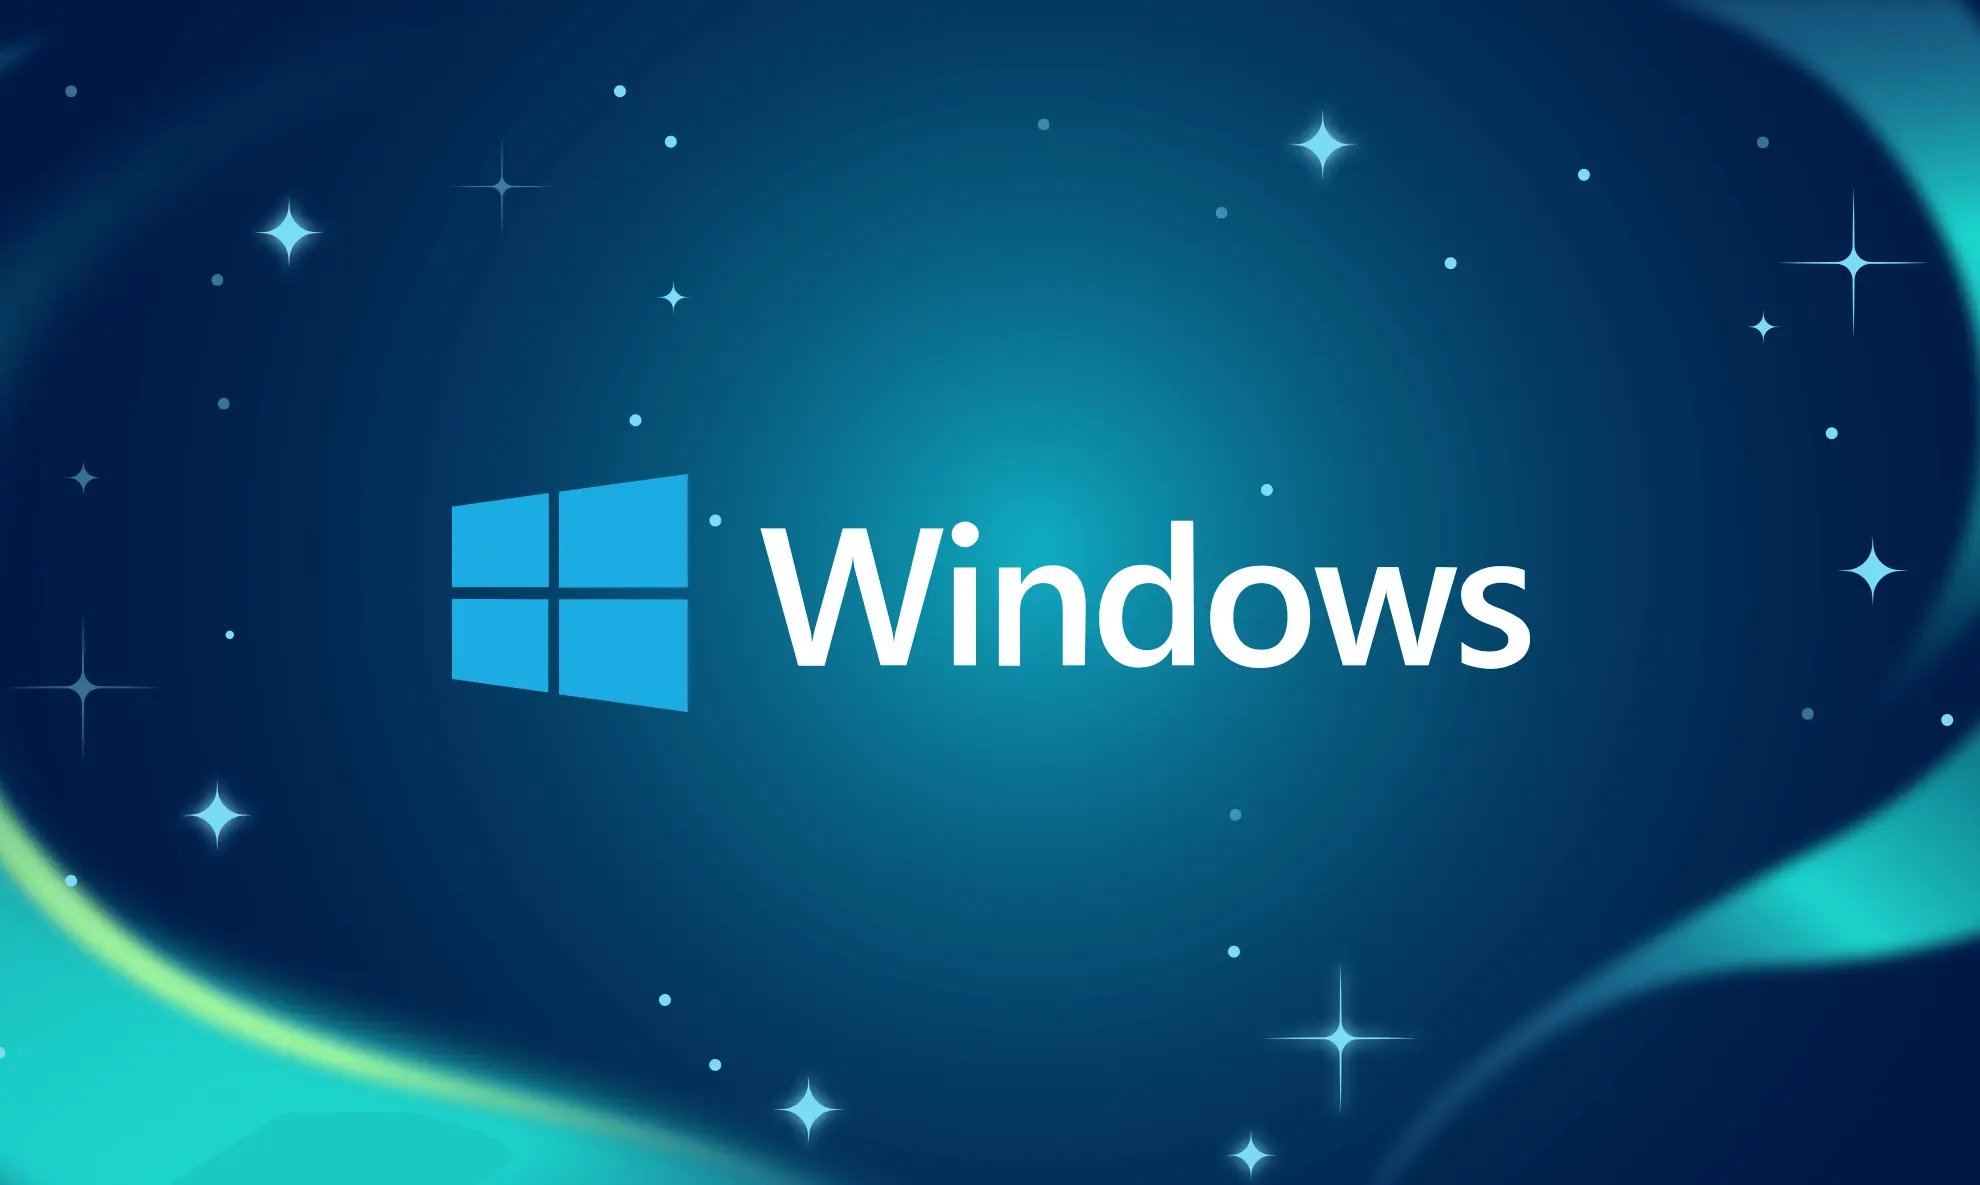 Windows Installation Options